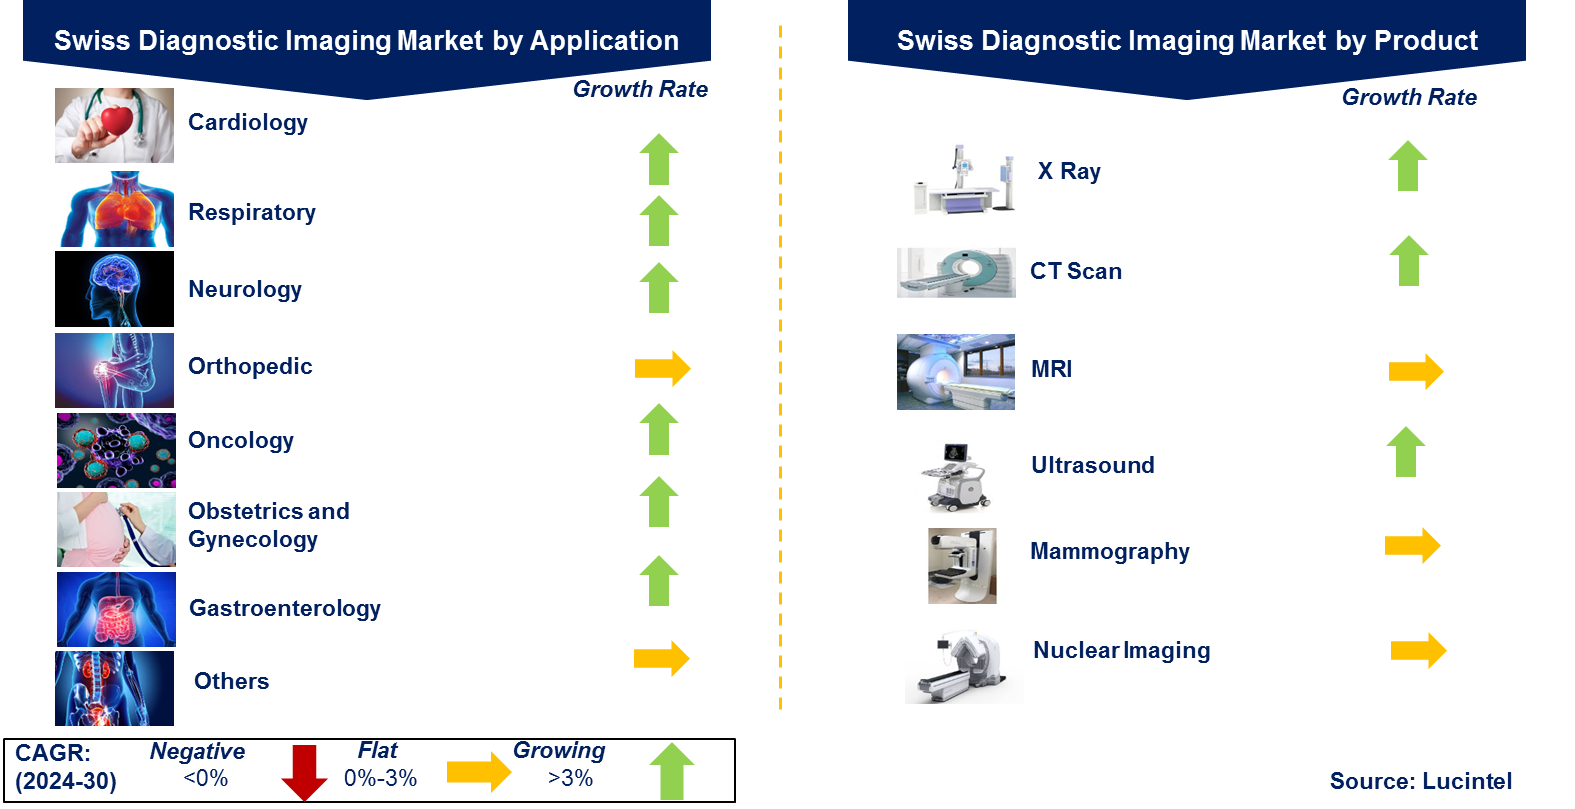 Swiss Diagnostic Imaging Market by Segments